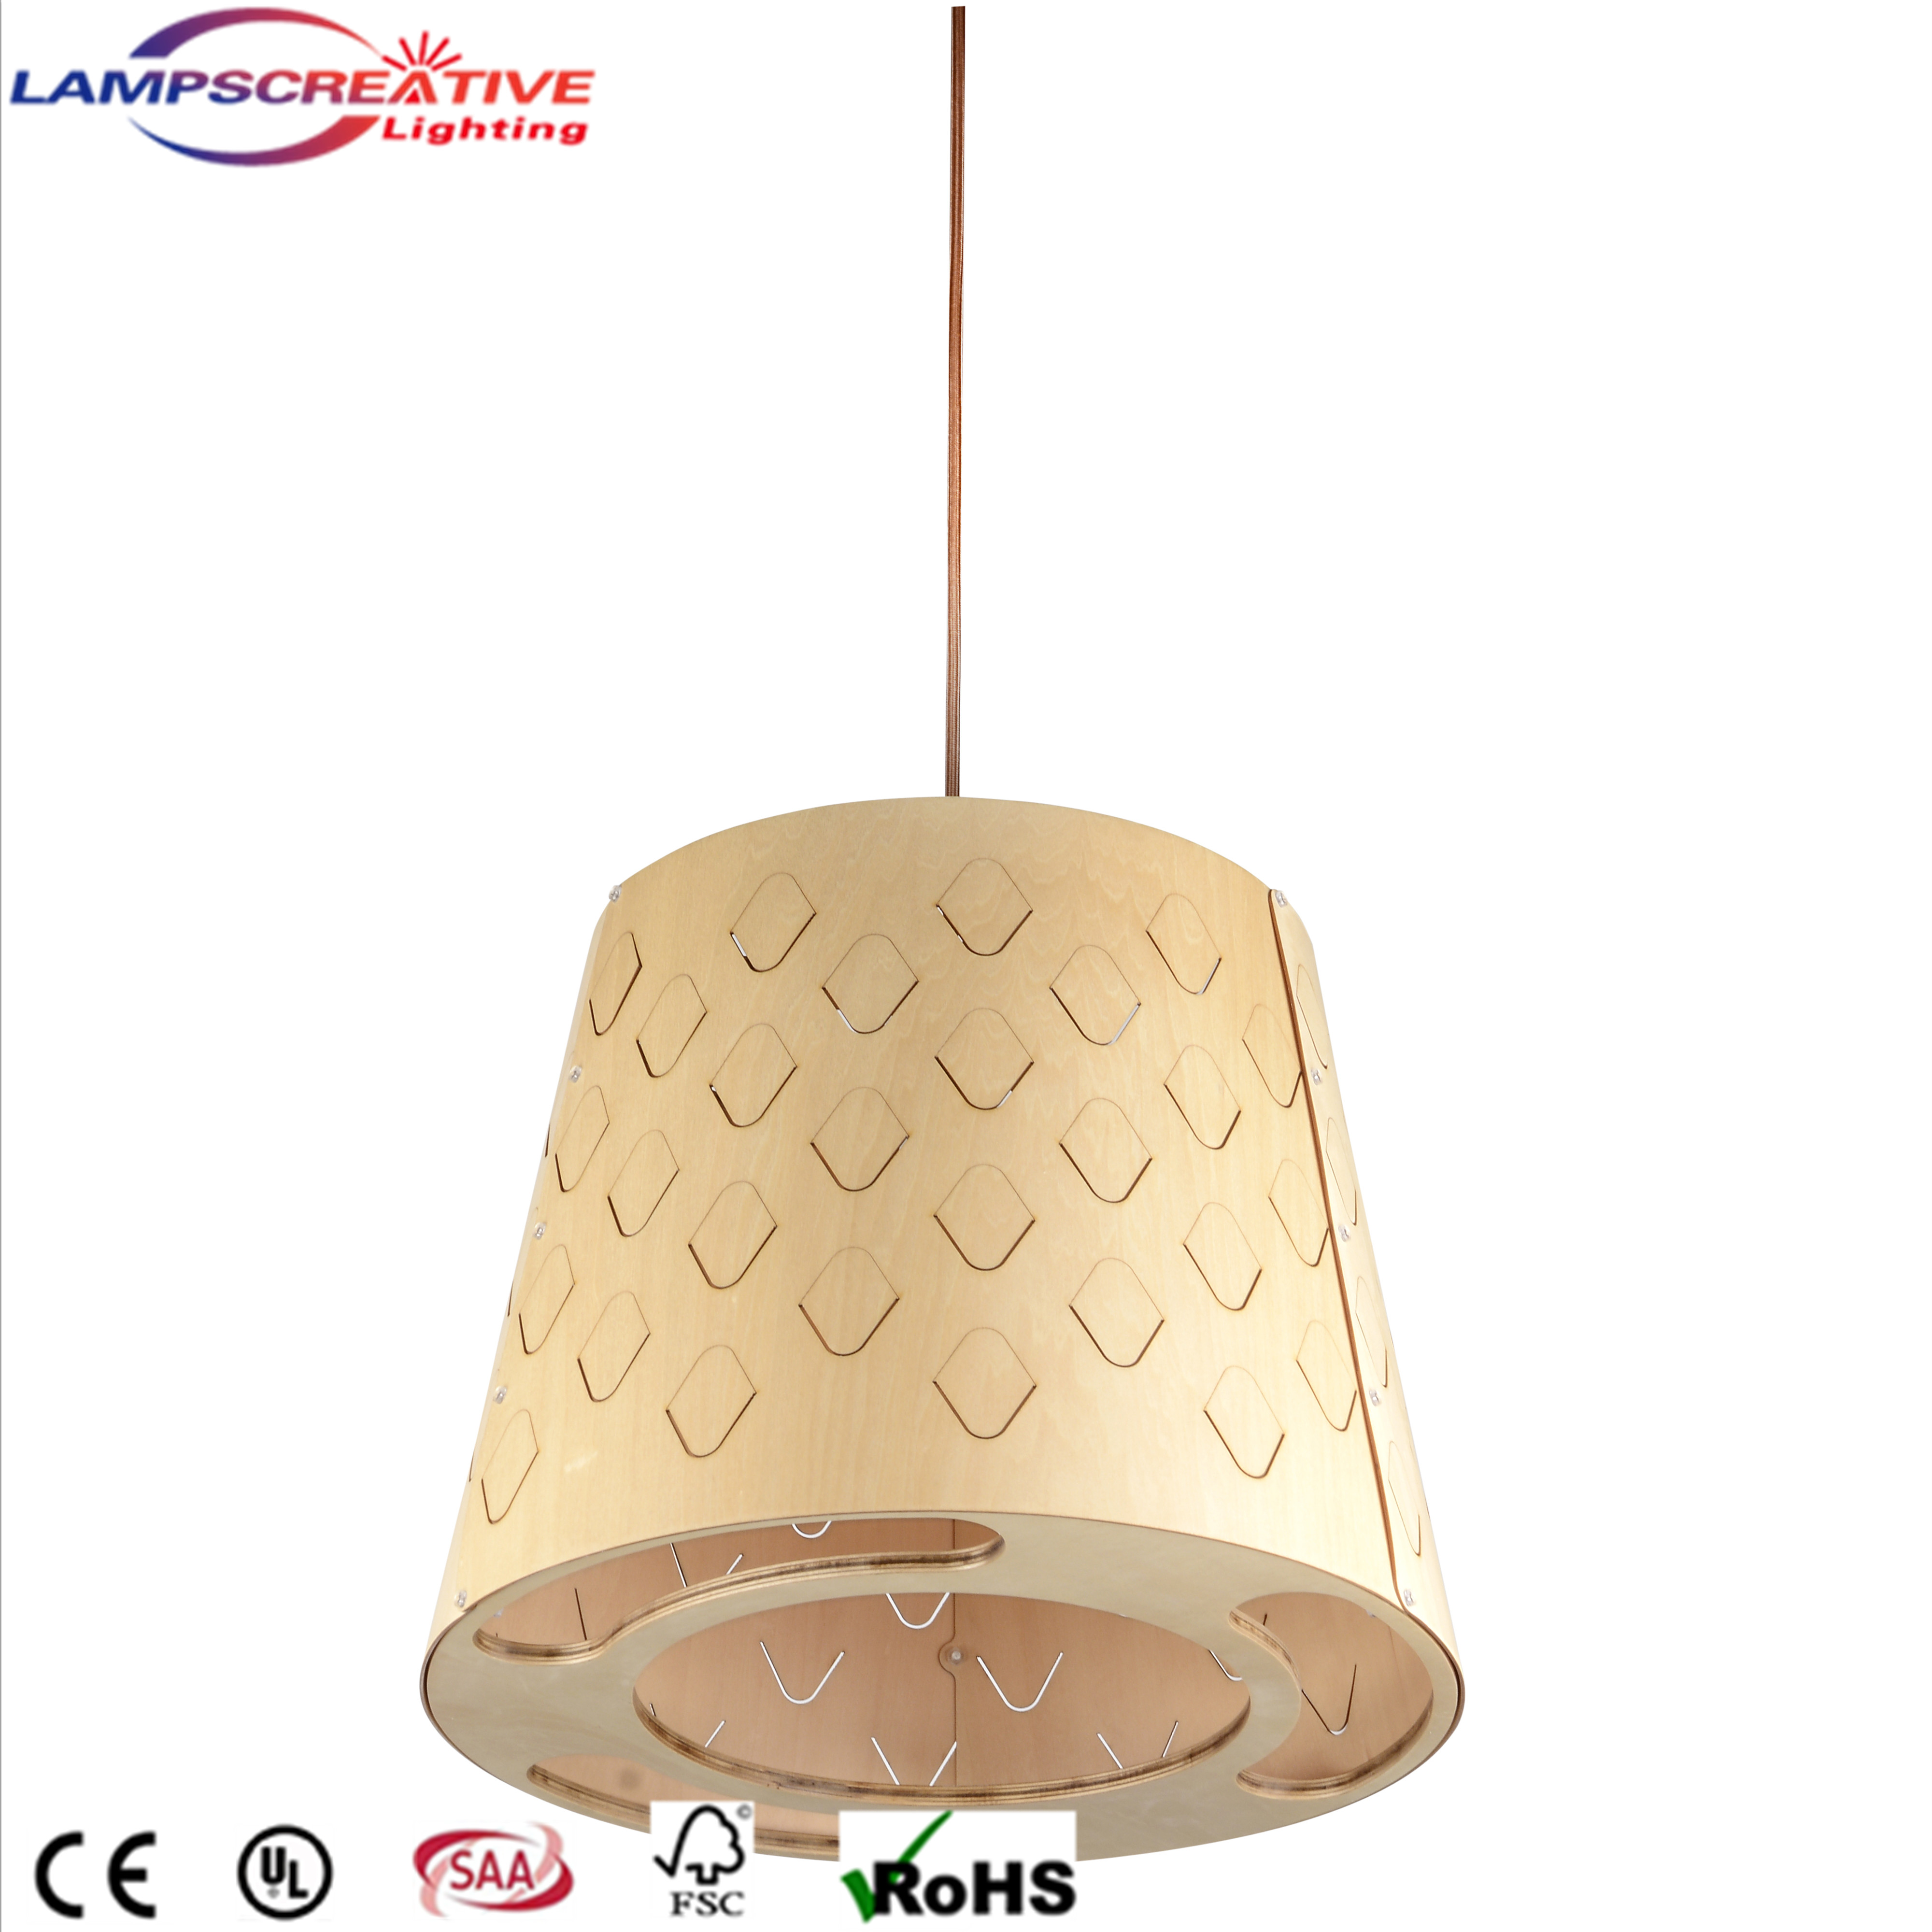 Handmake manpower wooden lamp